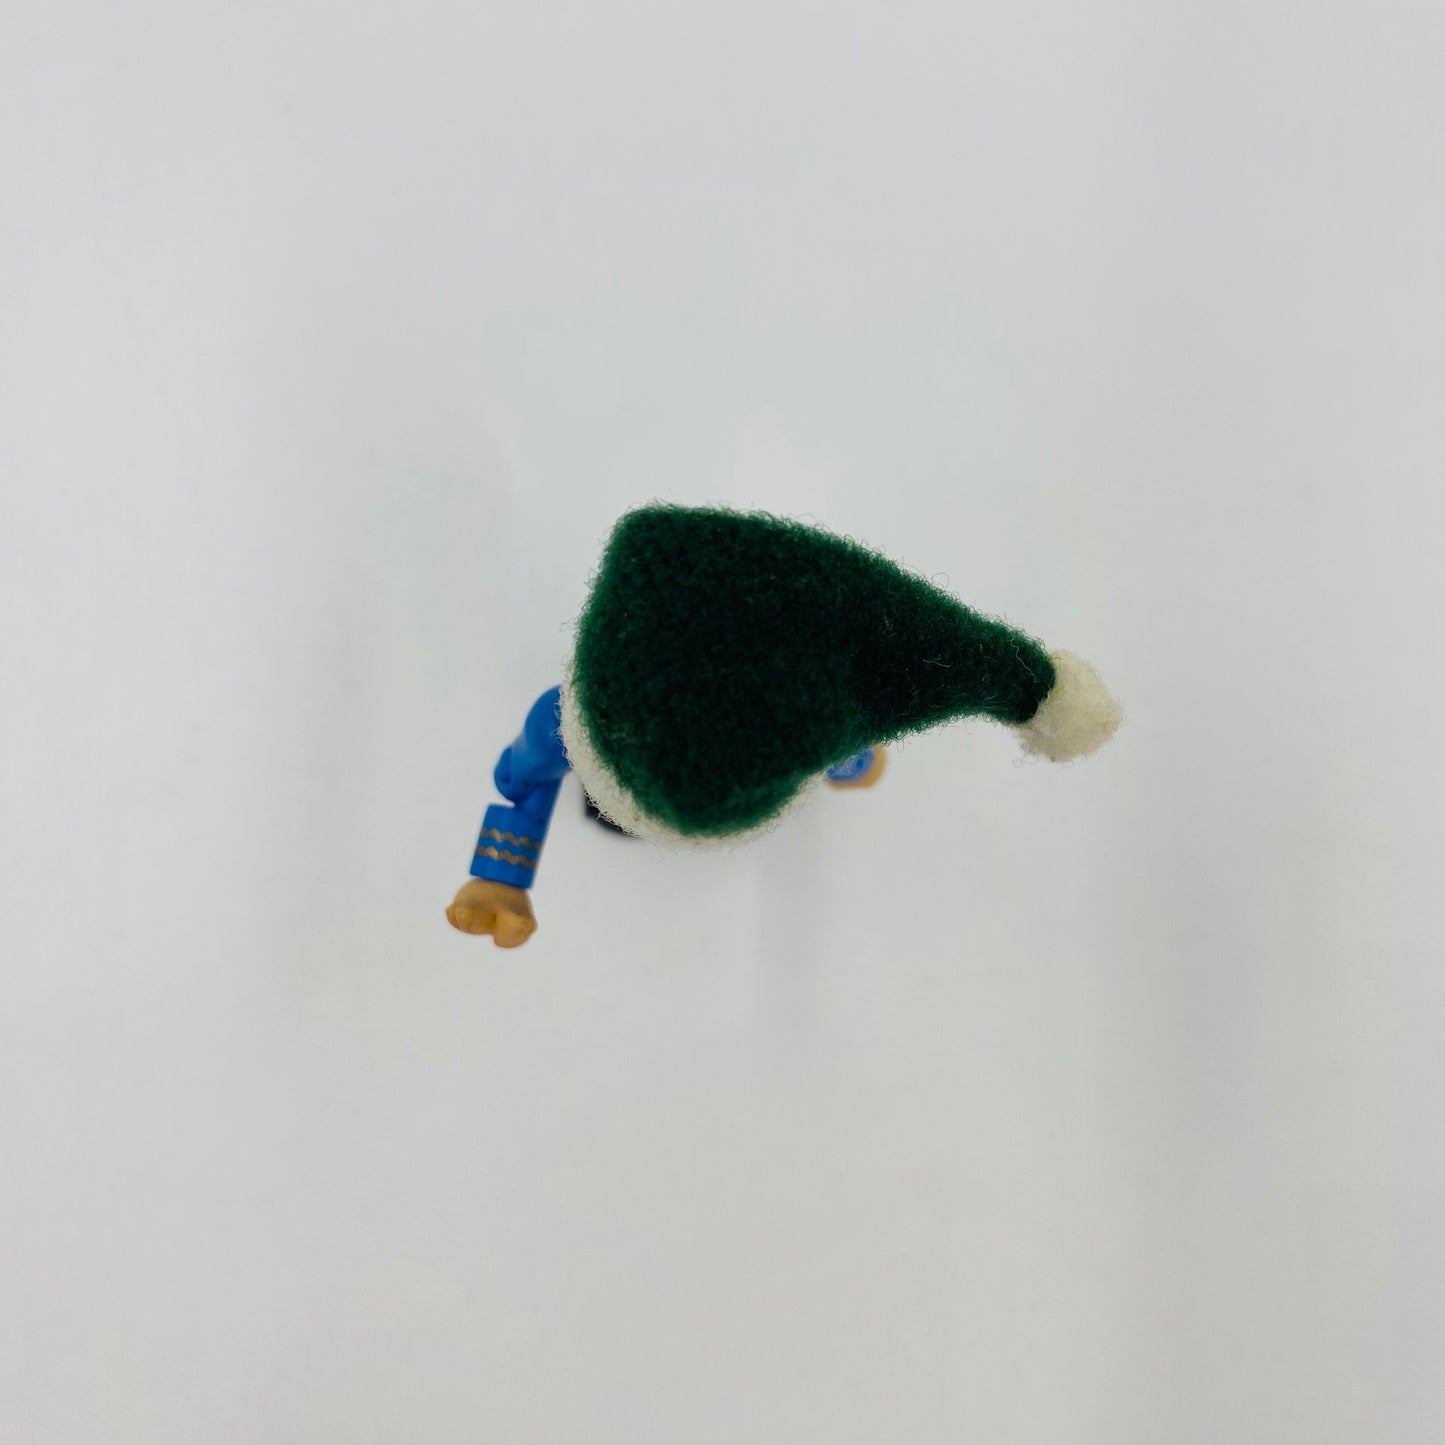 Minimates Star Trek Christmas Elf Spock loose 2" action figure (2009) Diamond Select Toys & Art Asylum